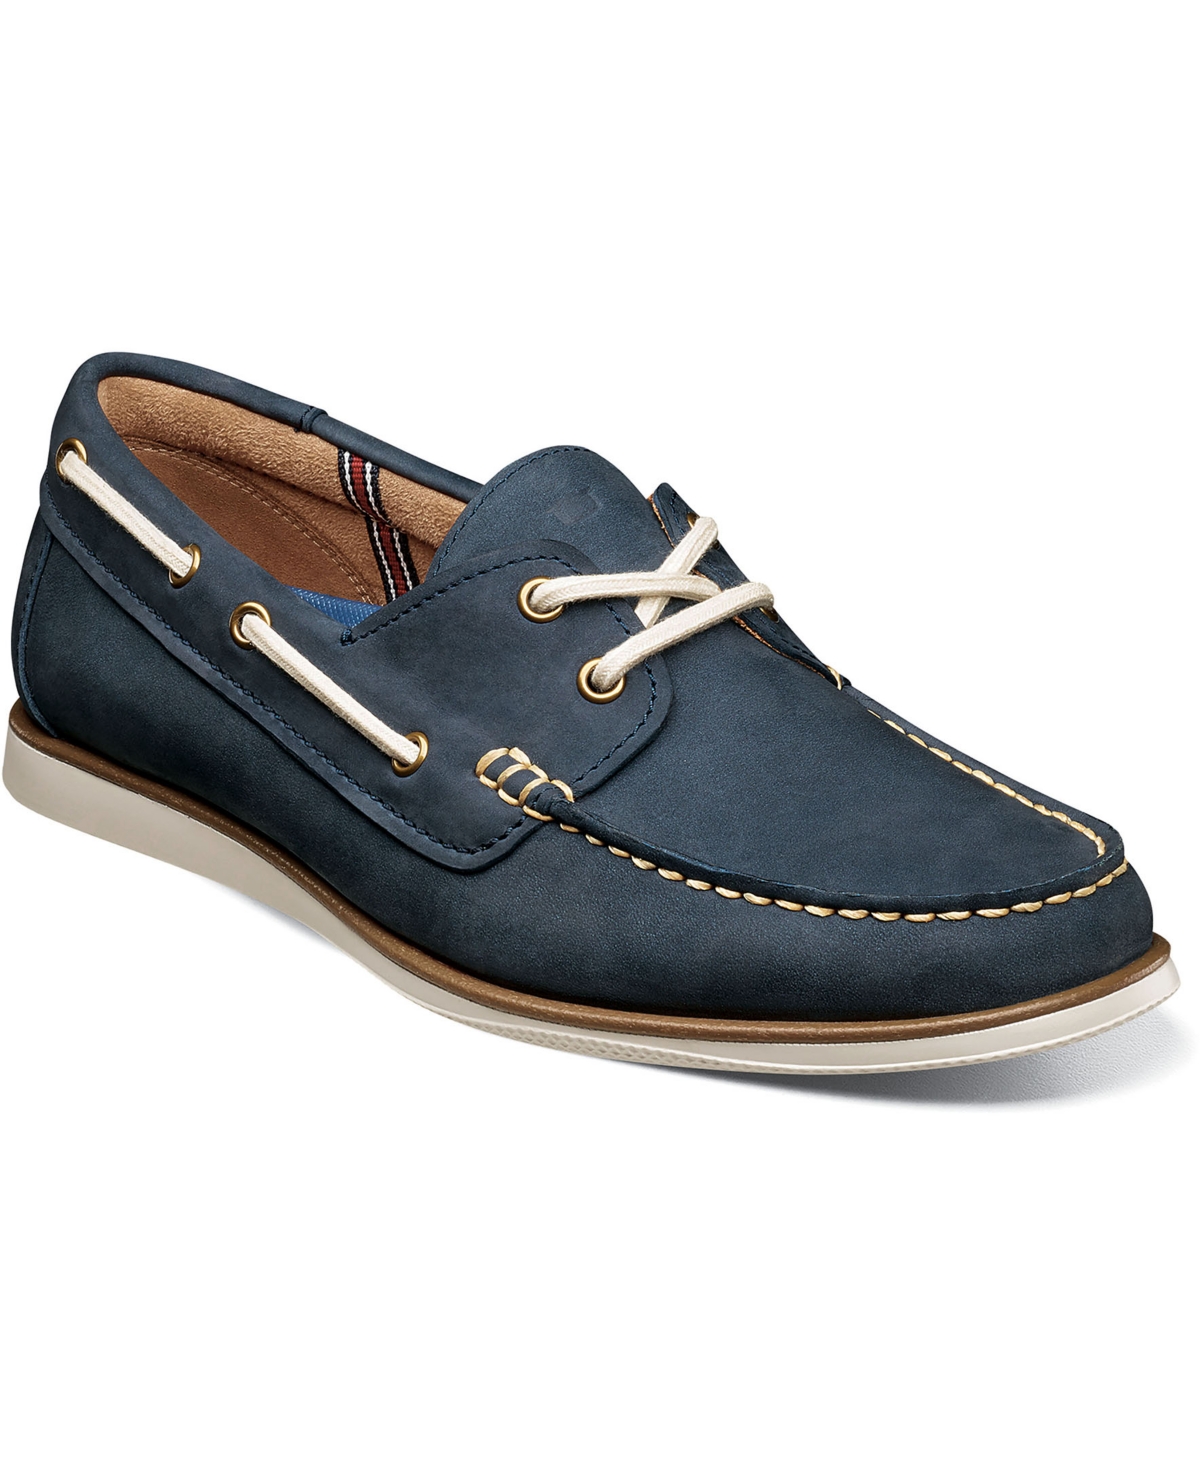 Men's Atlantic Moccasin Toe Boat Shoes - Navy